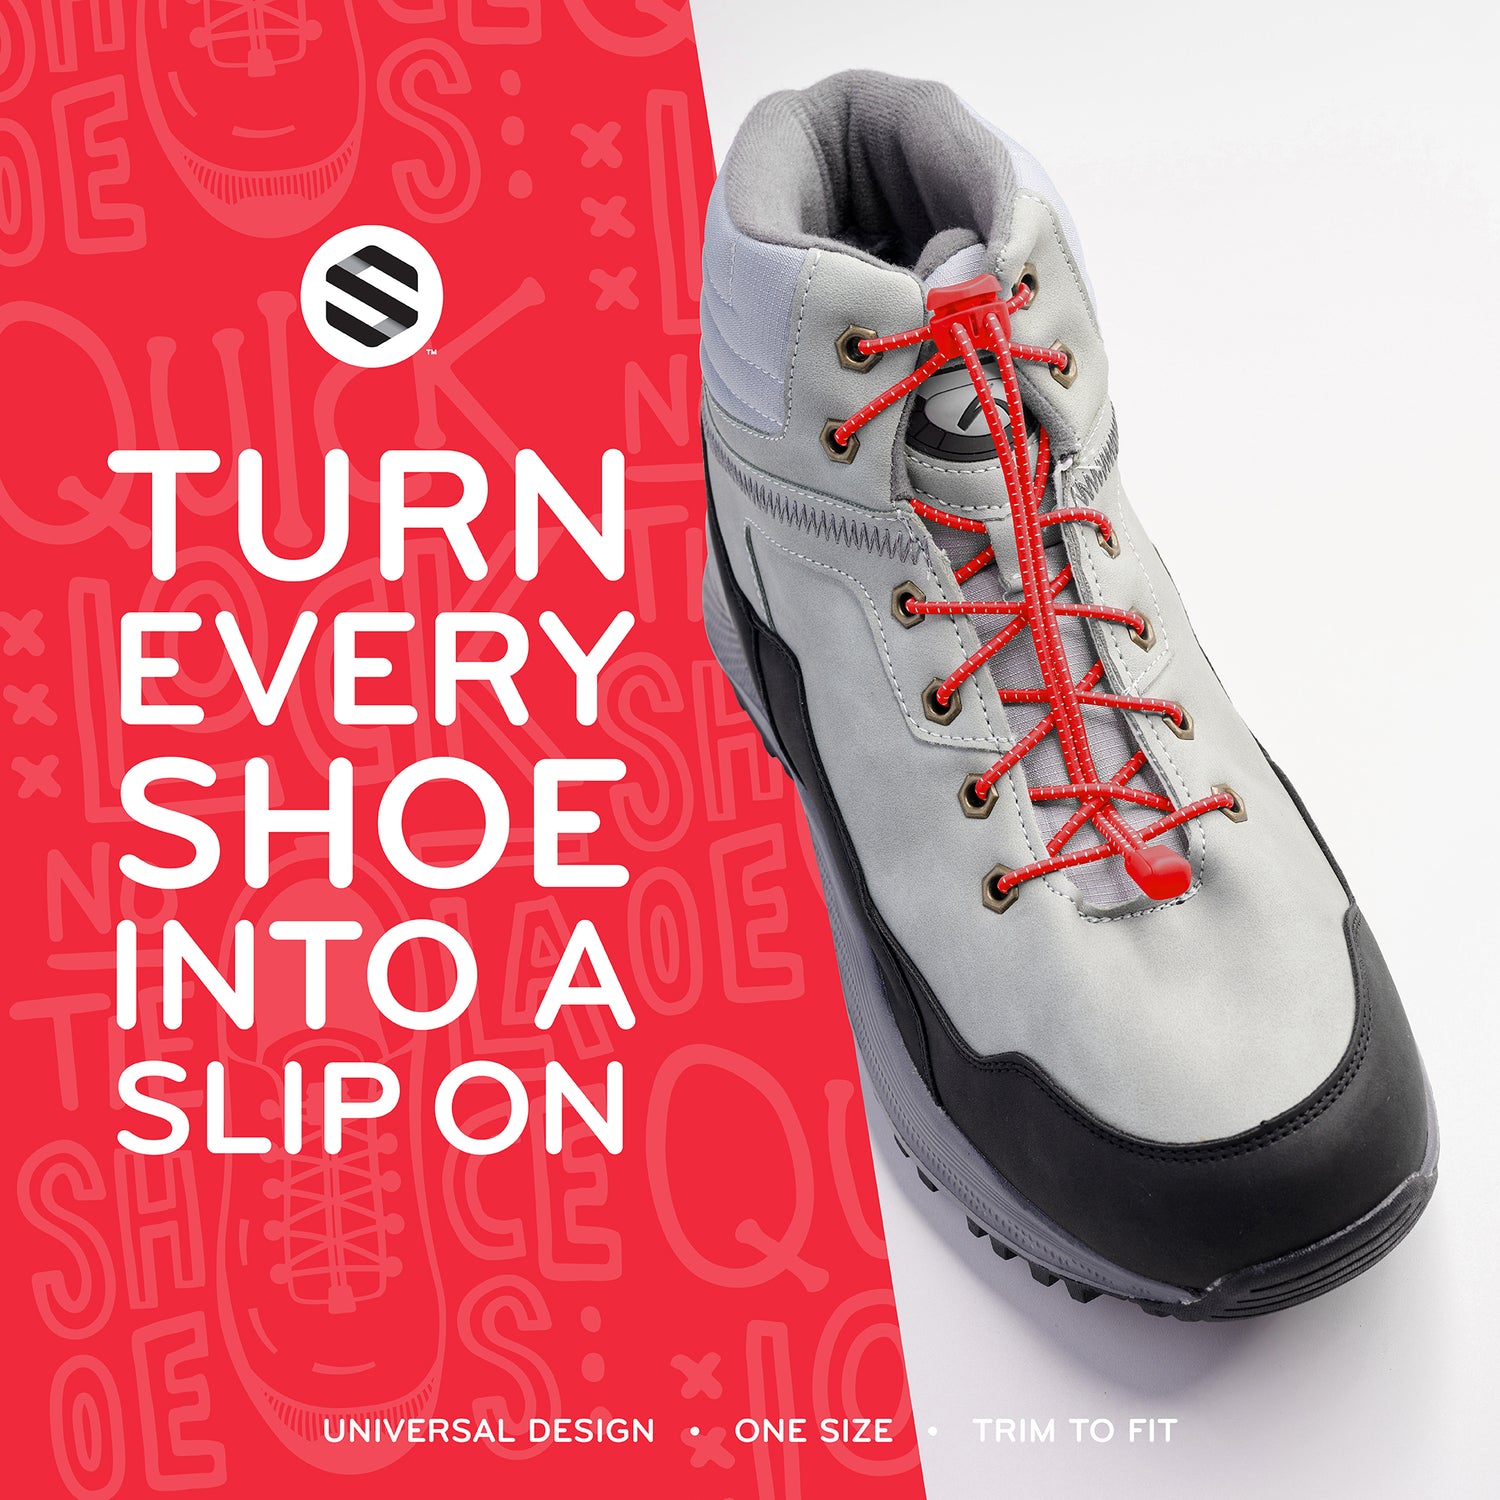 Red Quick Lock No Tie Elastic Shoelaces – The Original Stretchlace